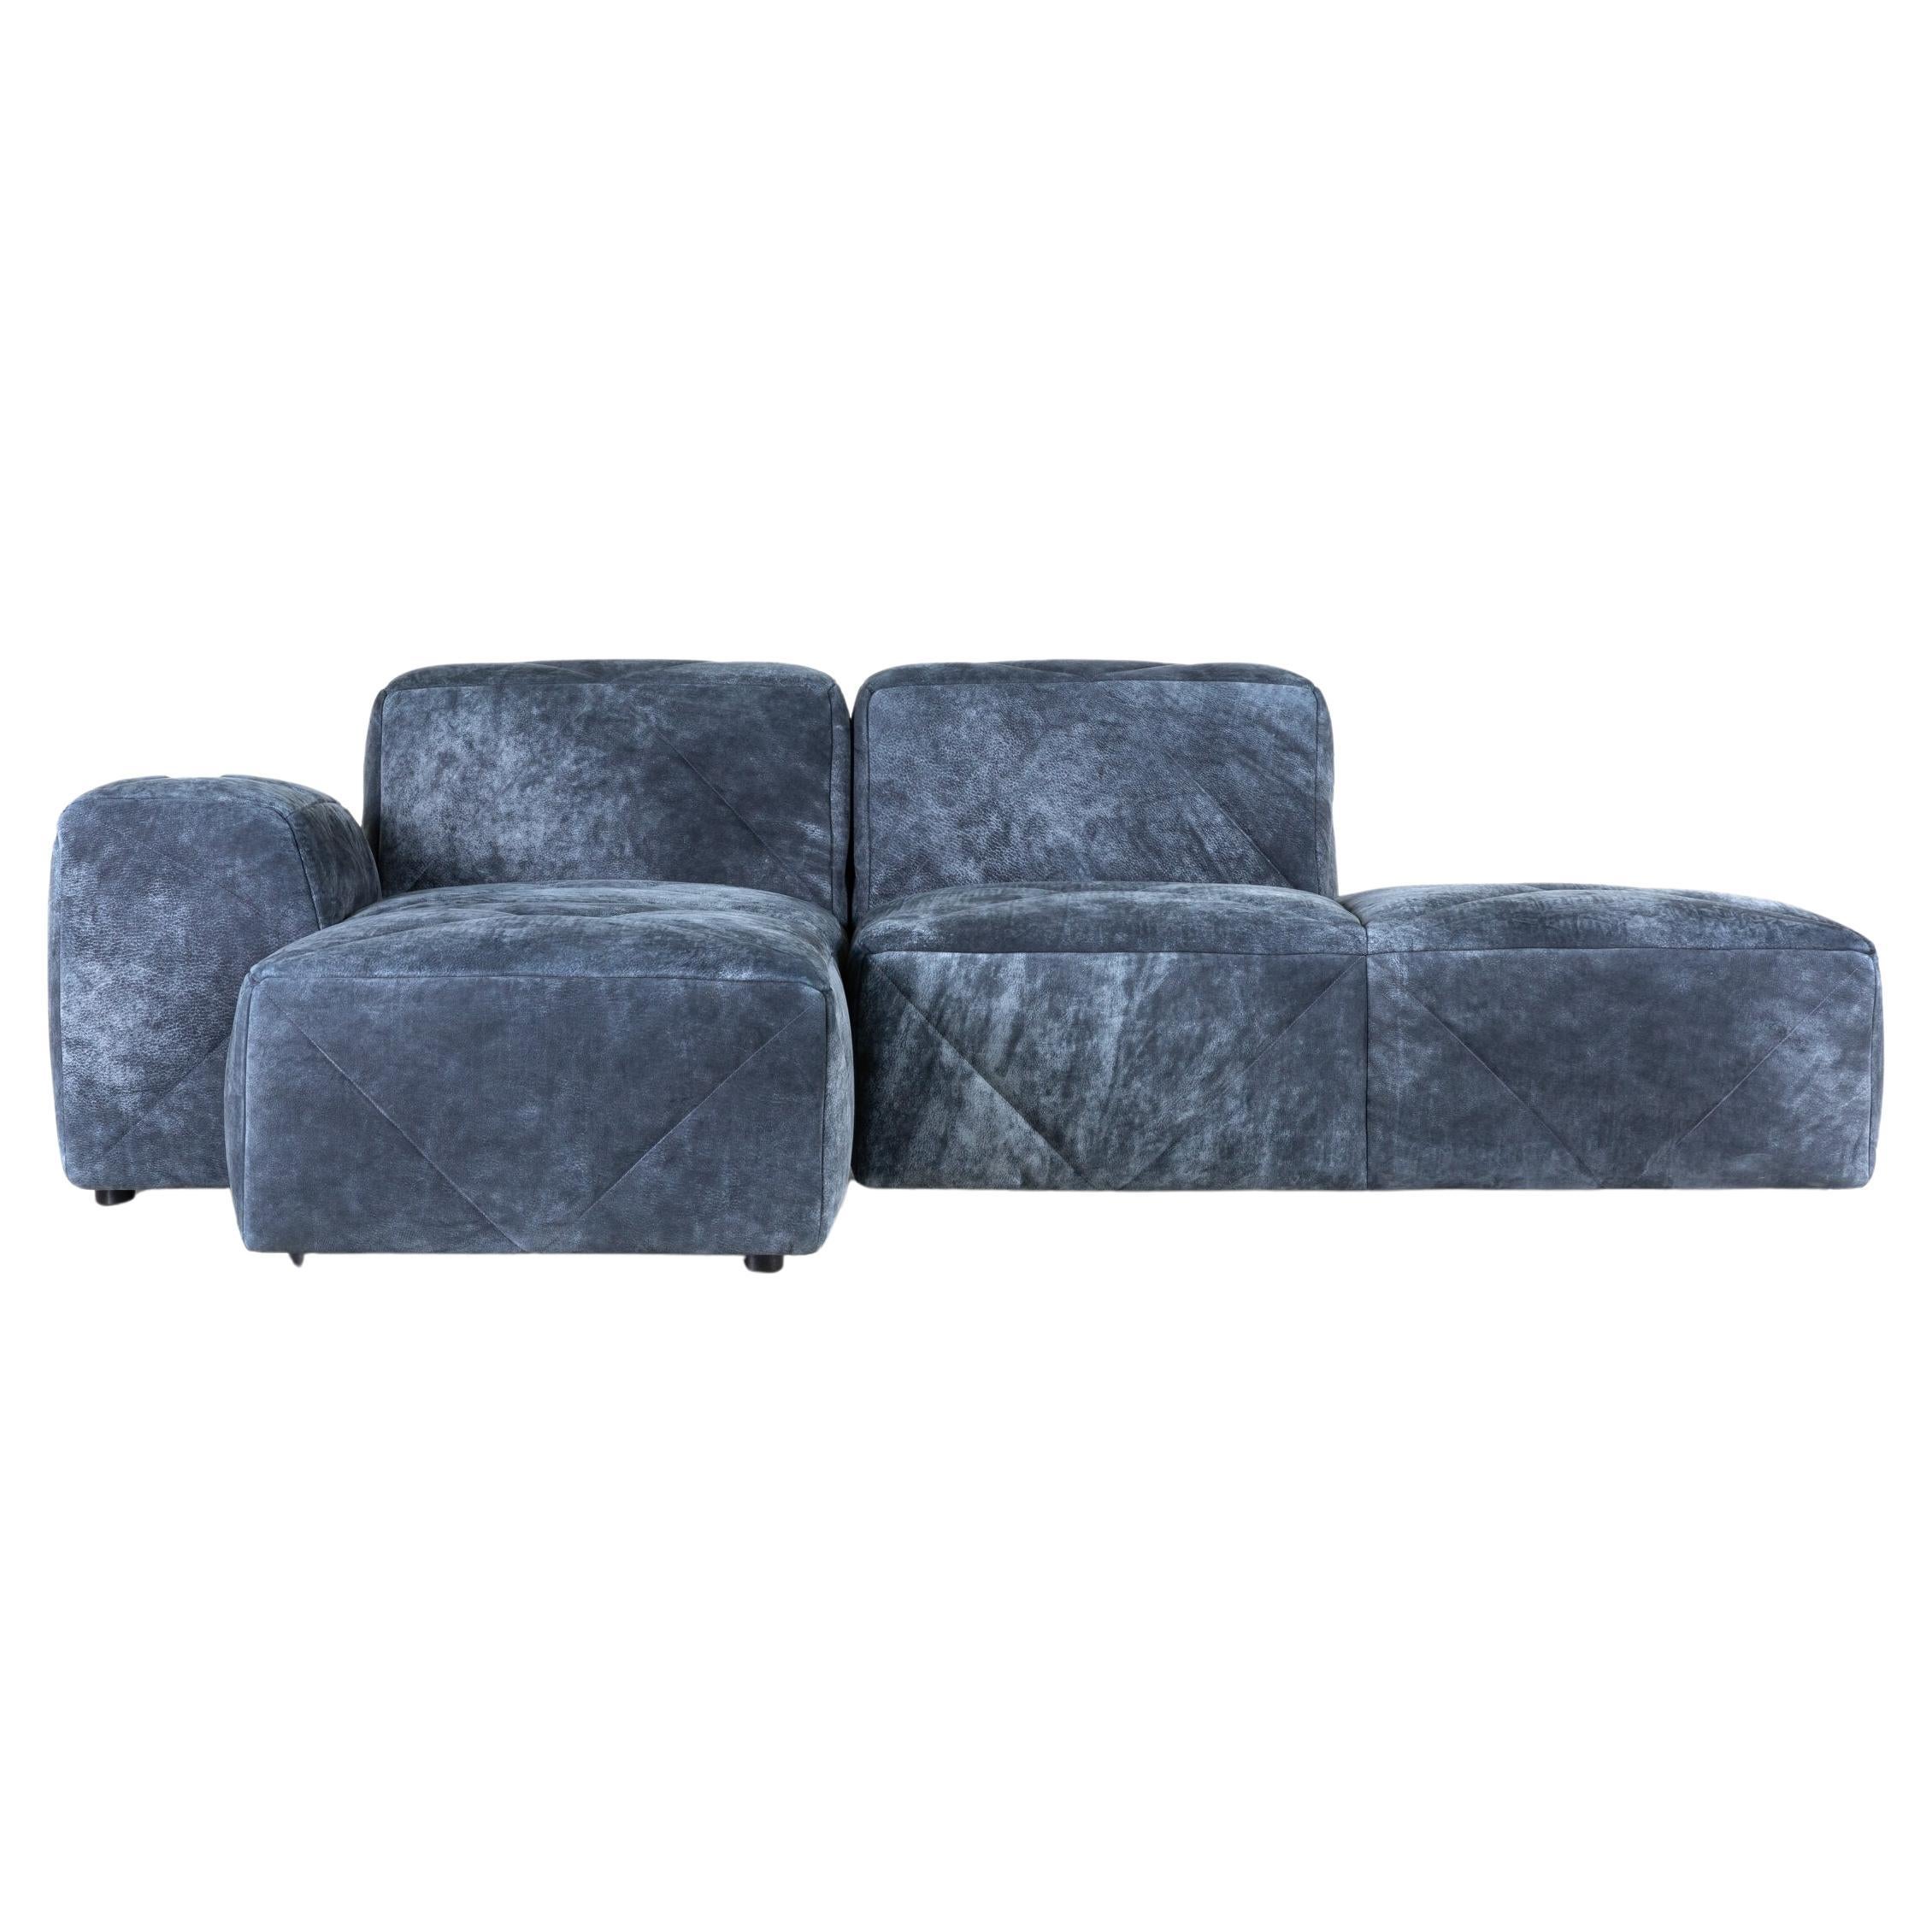 Moooi BFF Left Arm Chaise Longue Sofa in Dwarf Rhino Buffed Blue Upholstery For Sale